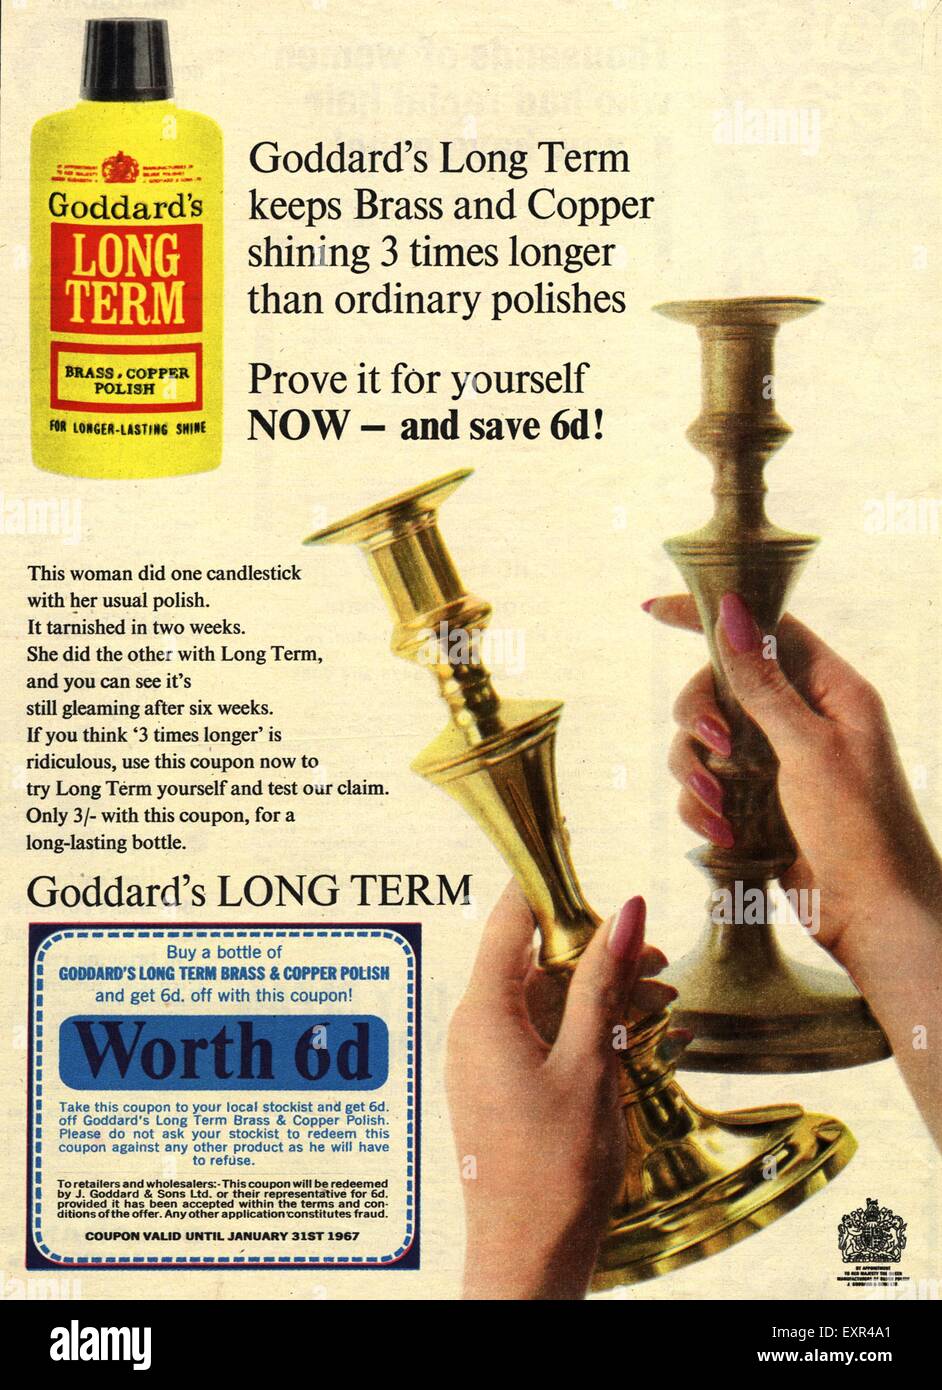 1960s magazine advertisement advertising Goddard's Long Term